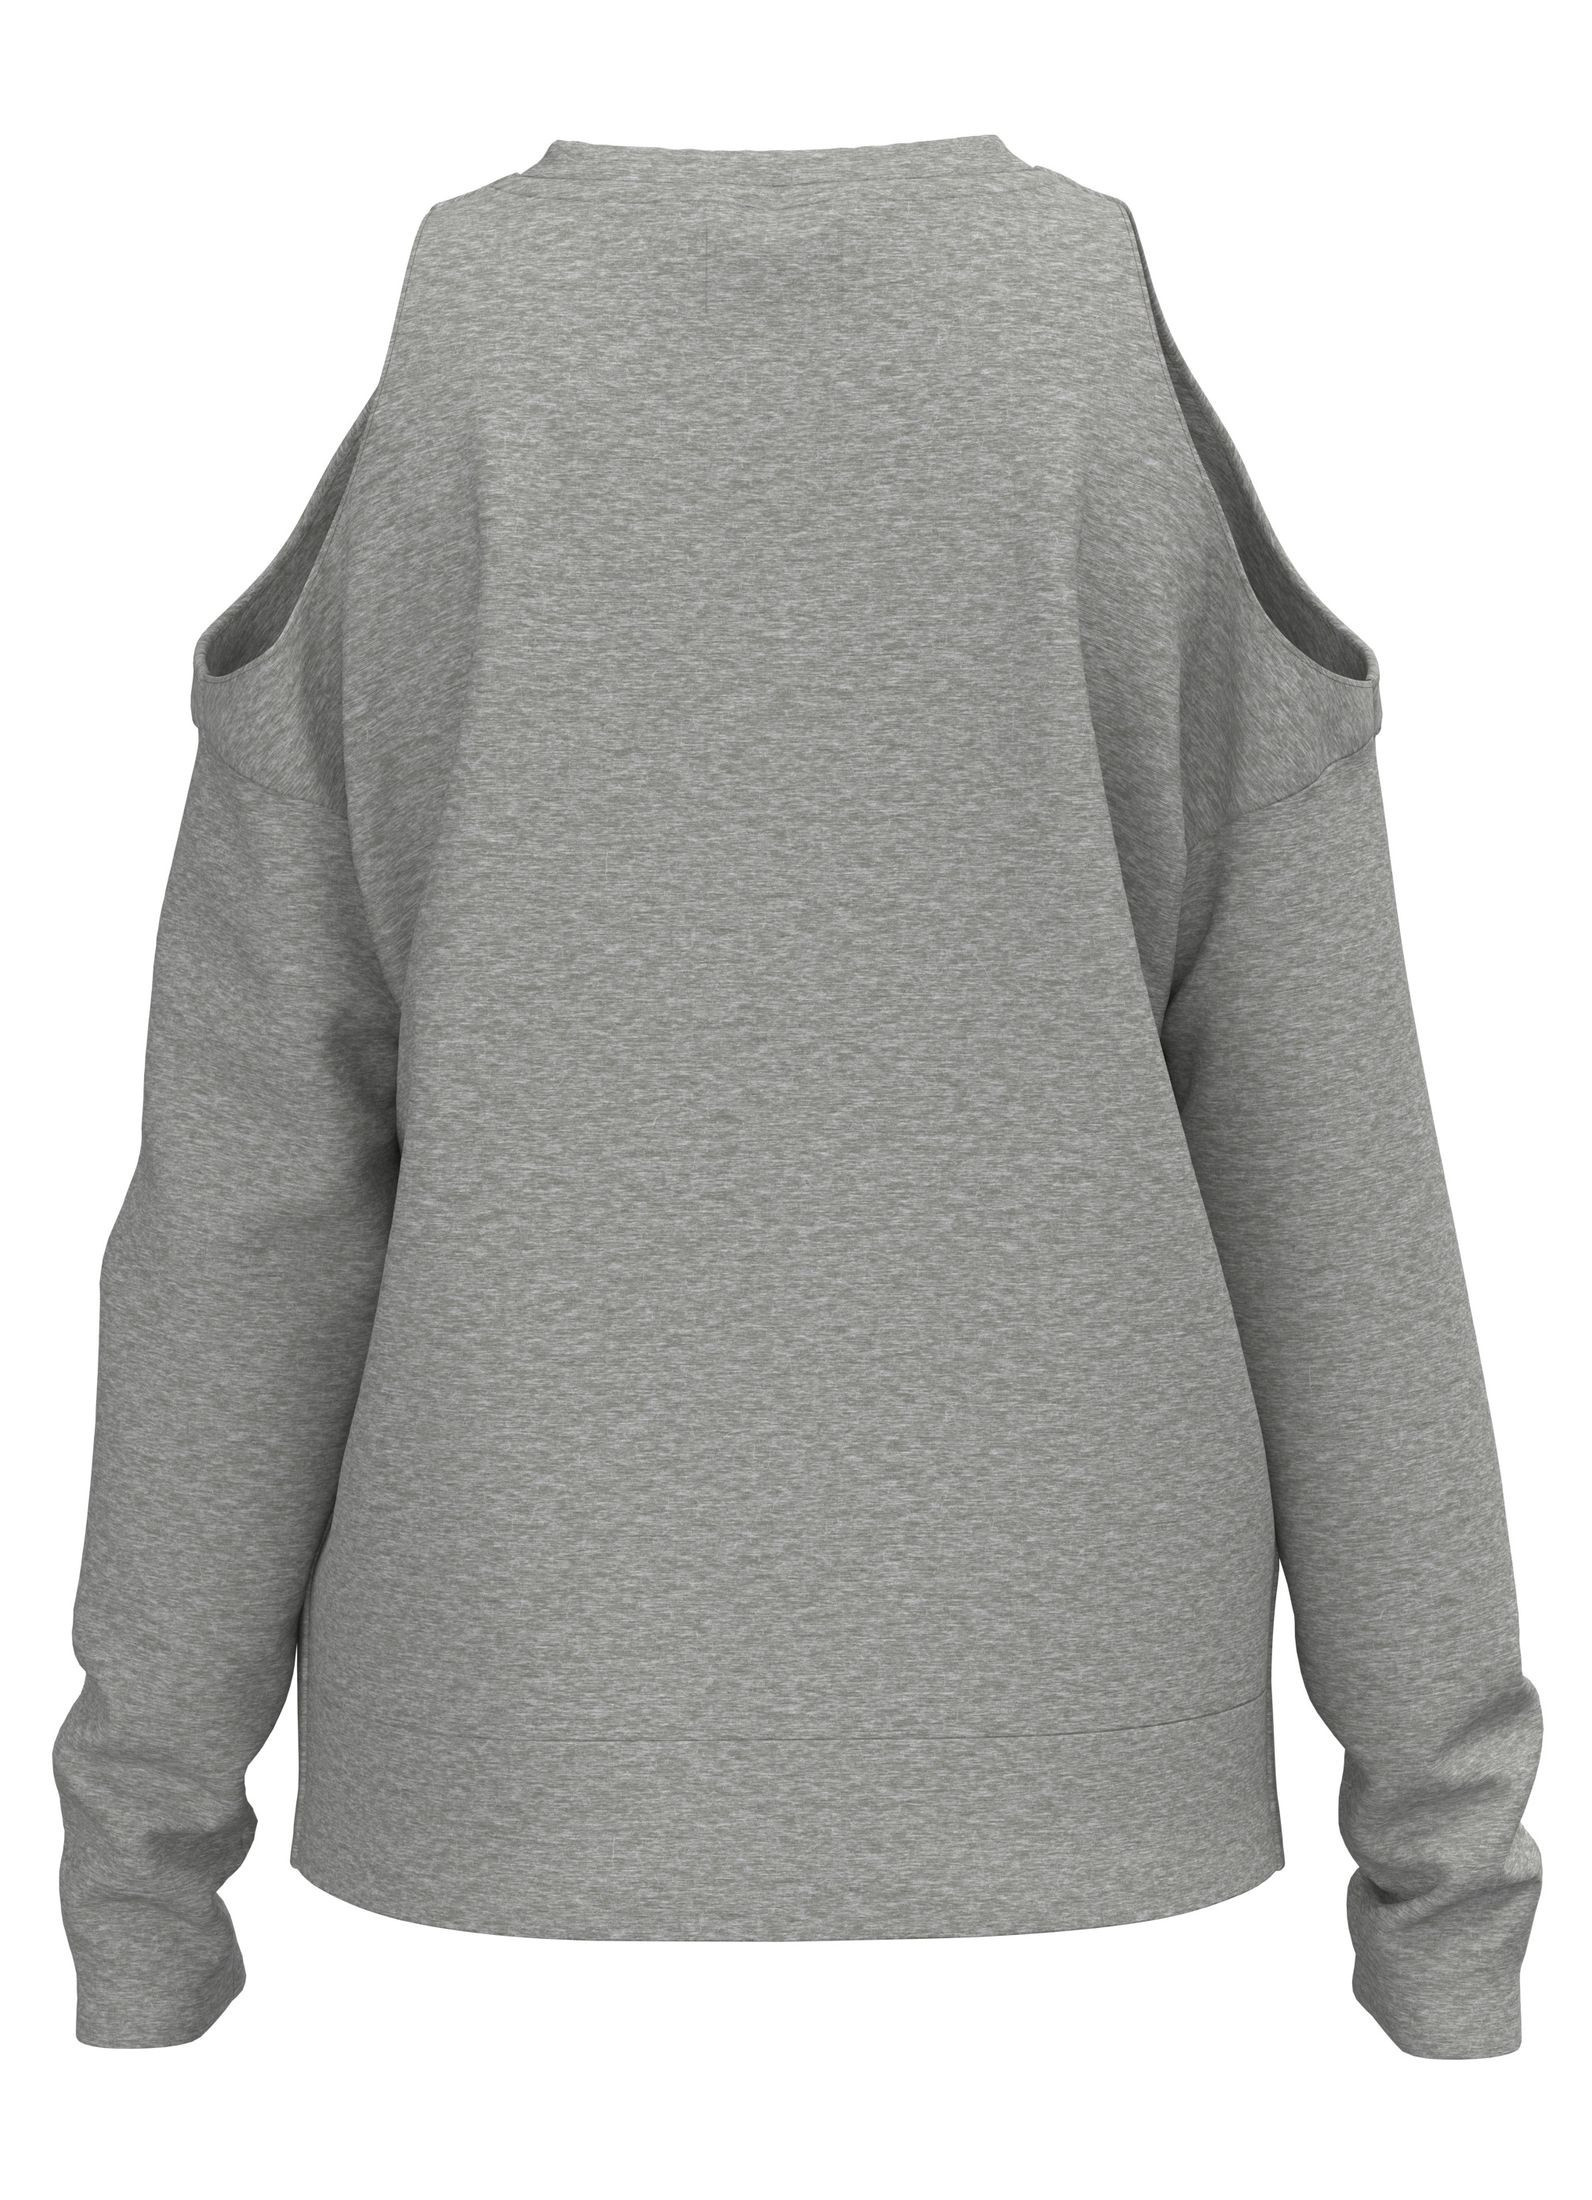 Sweatshirt, Grey, large image number 1